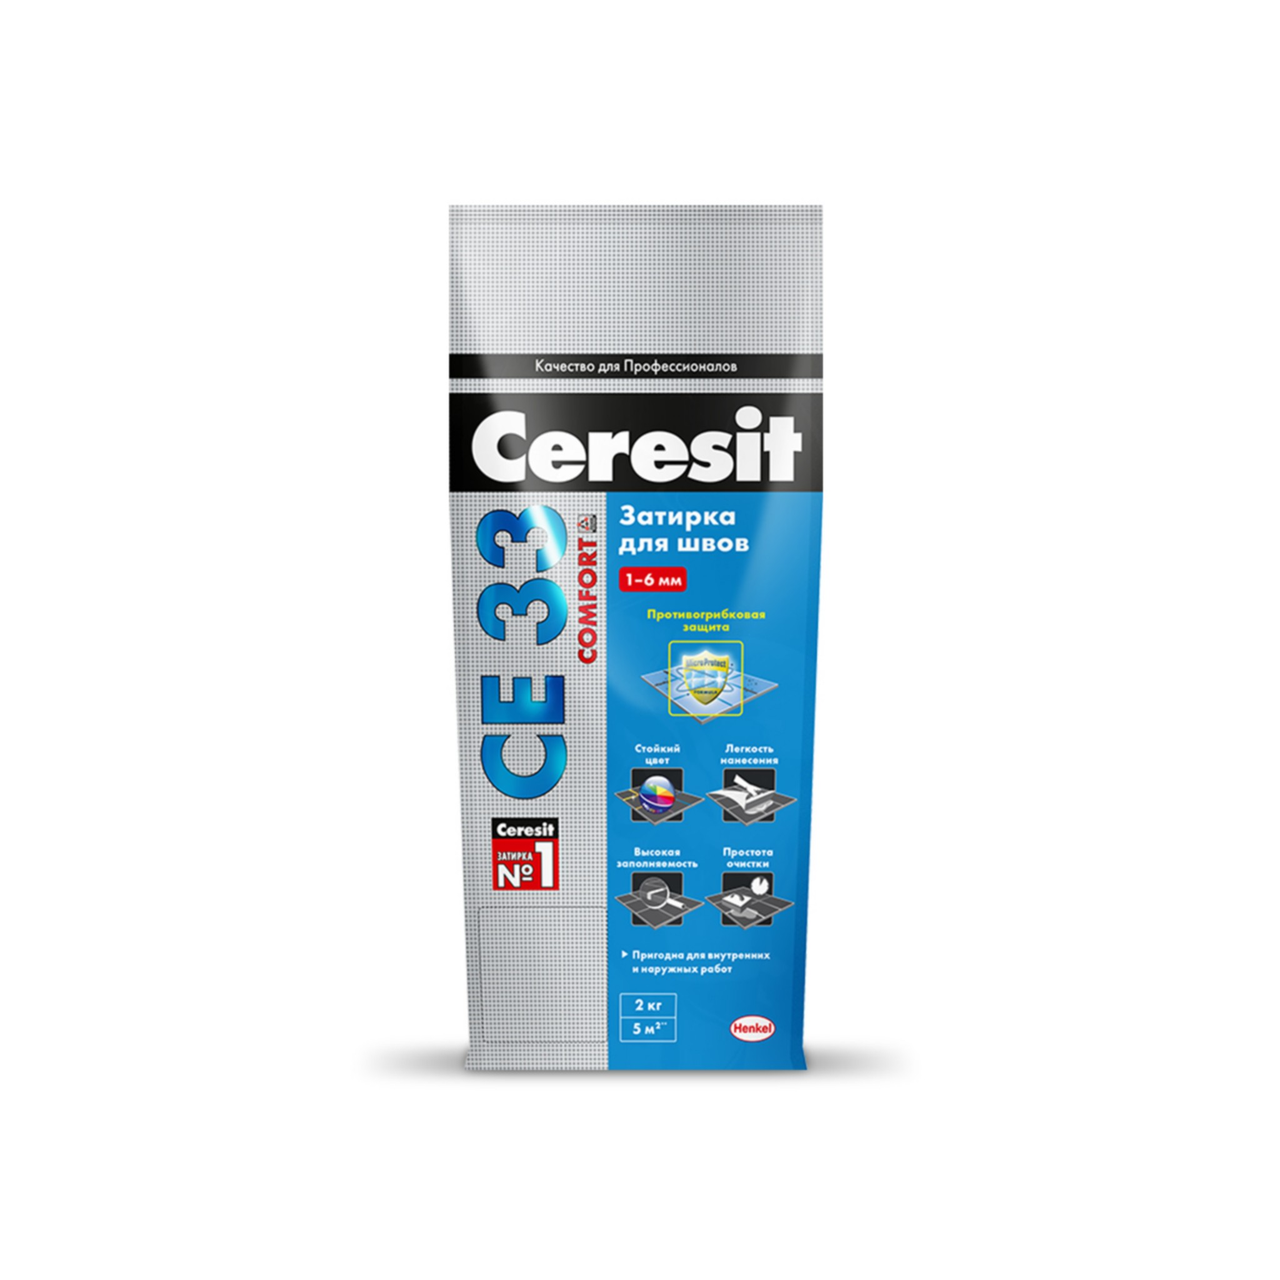 Ceresit  CE 33 Comfort затирка для узких швов, цвет: Мята (Mint), 2 кг